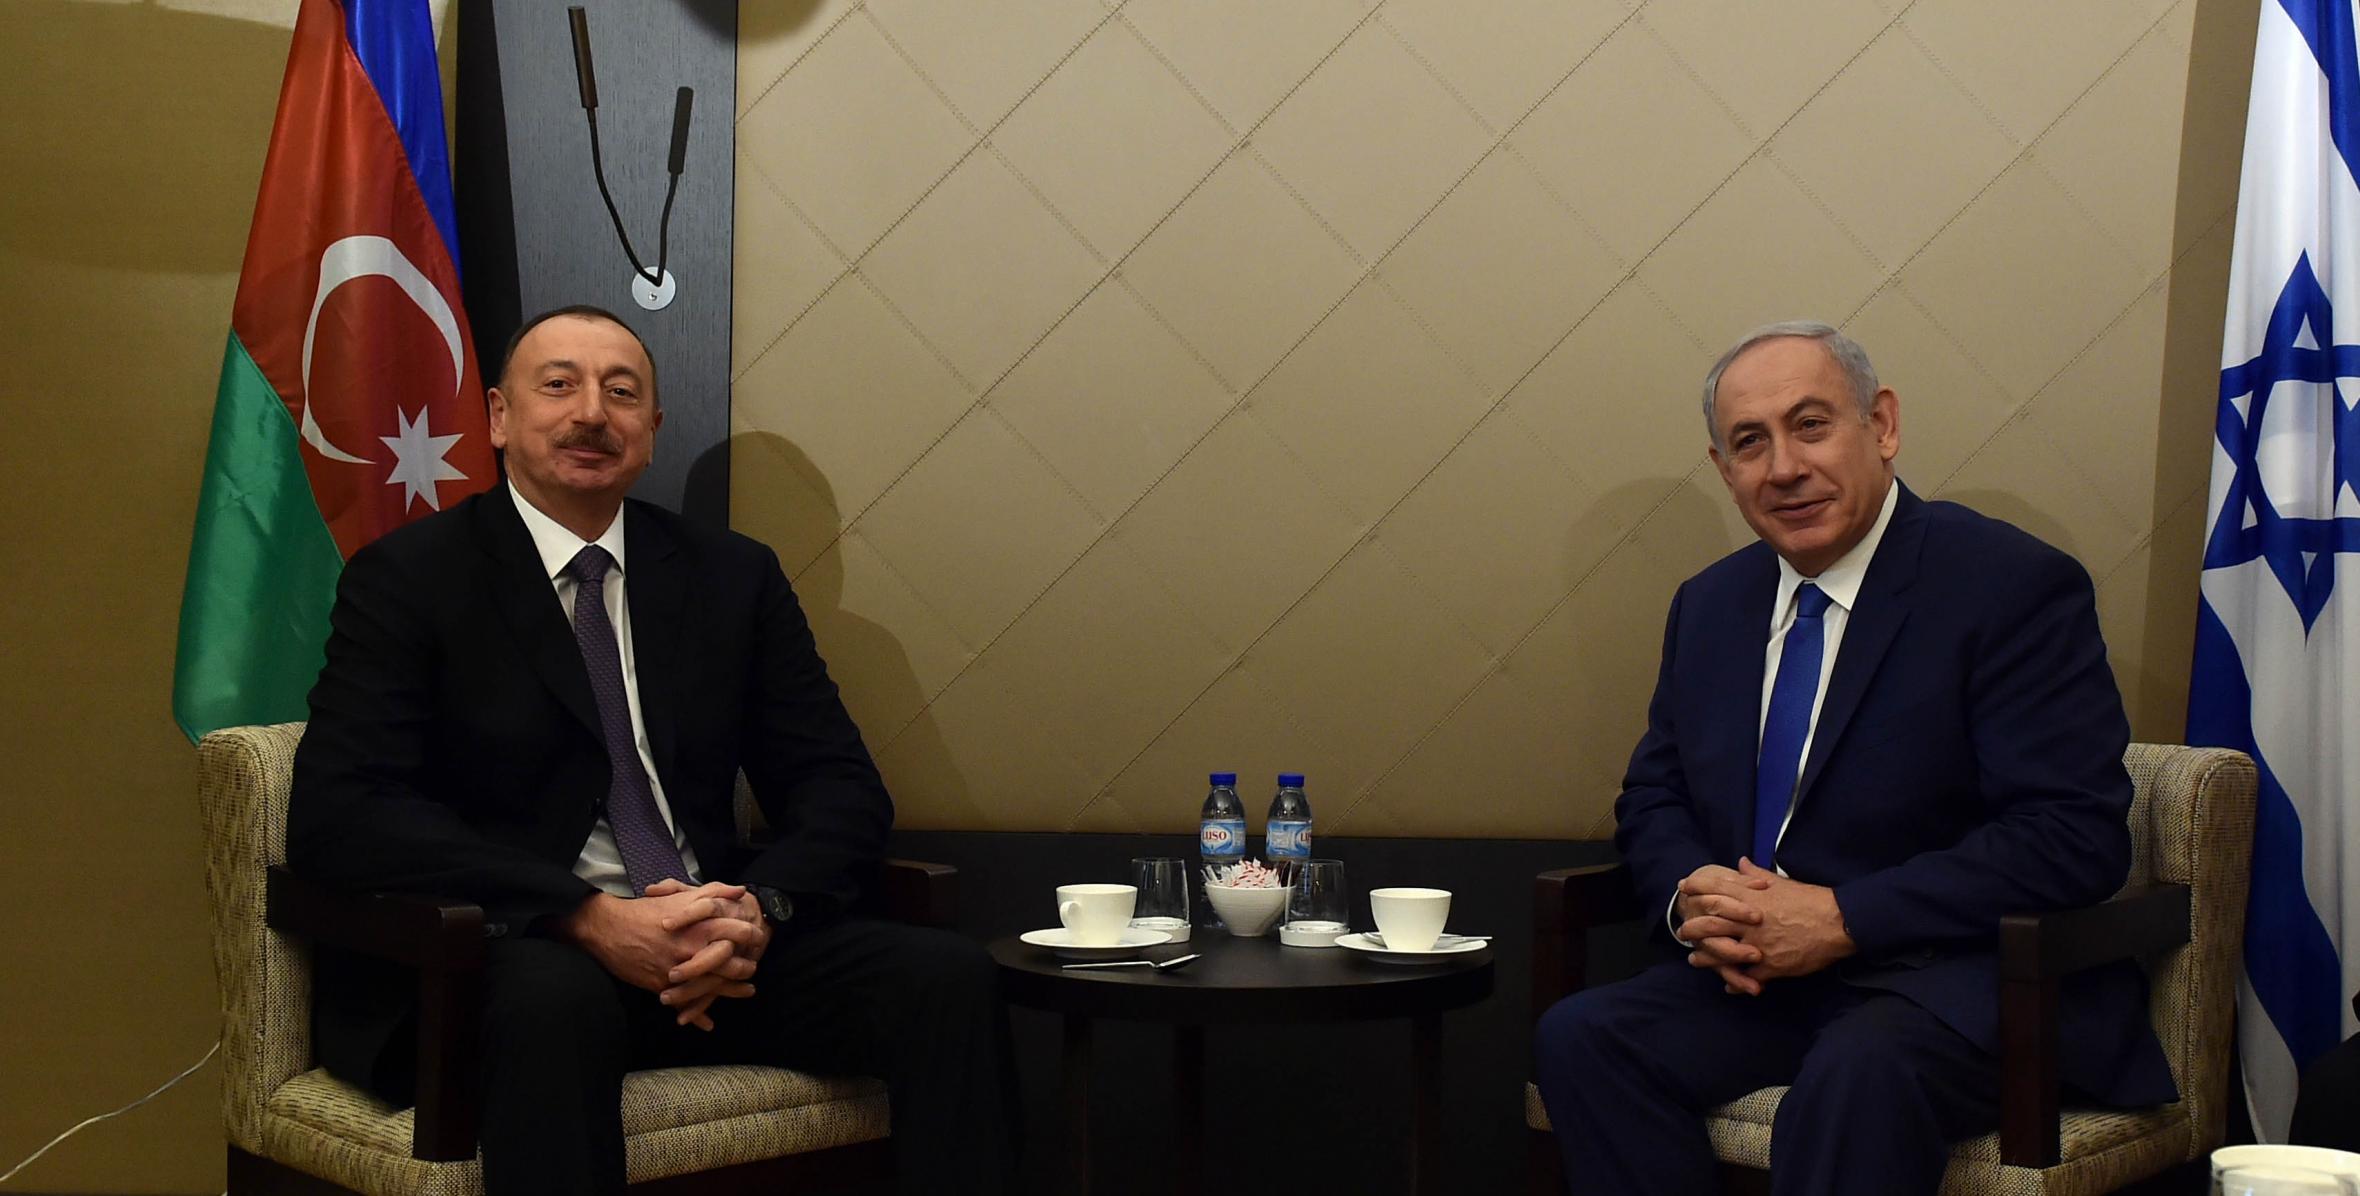 Ilham Aliyev met with Israeli Prime Minister Benjamin Netanyahu